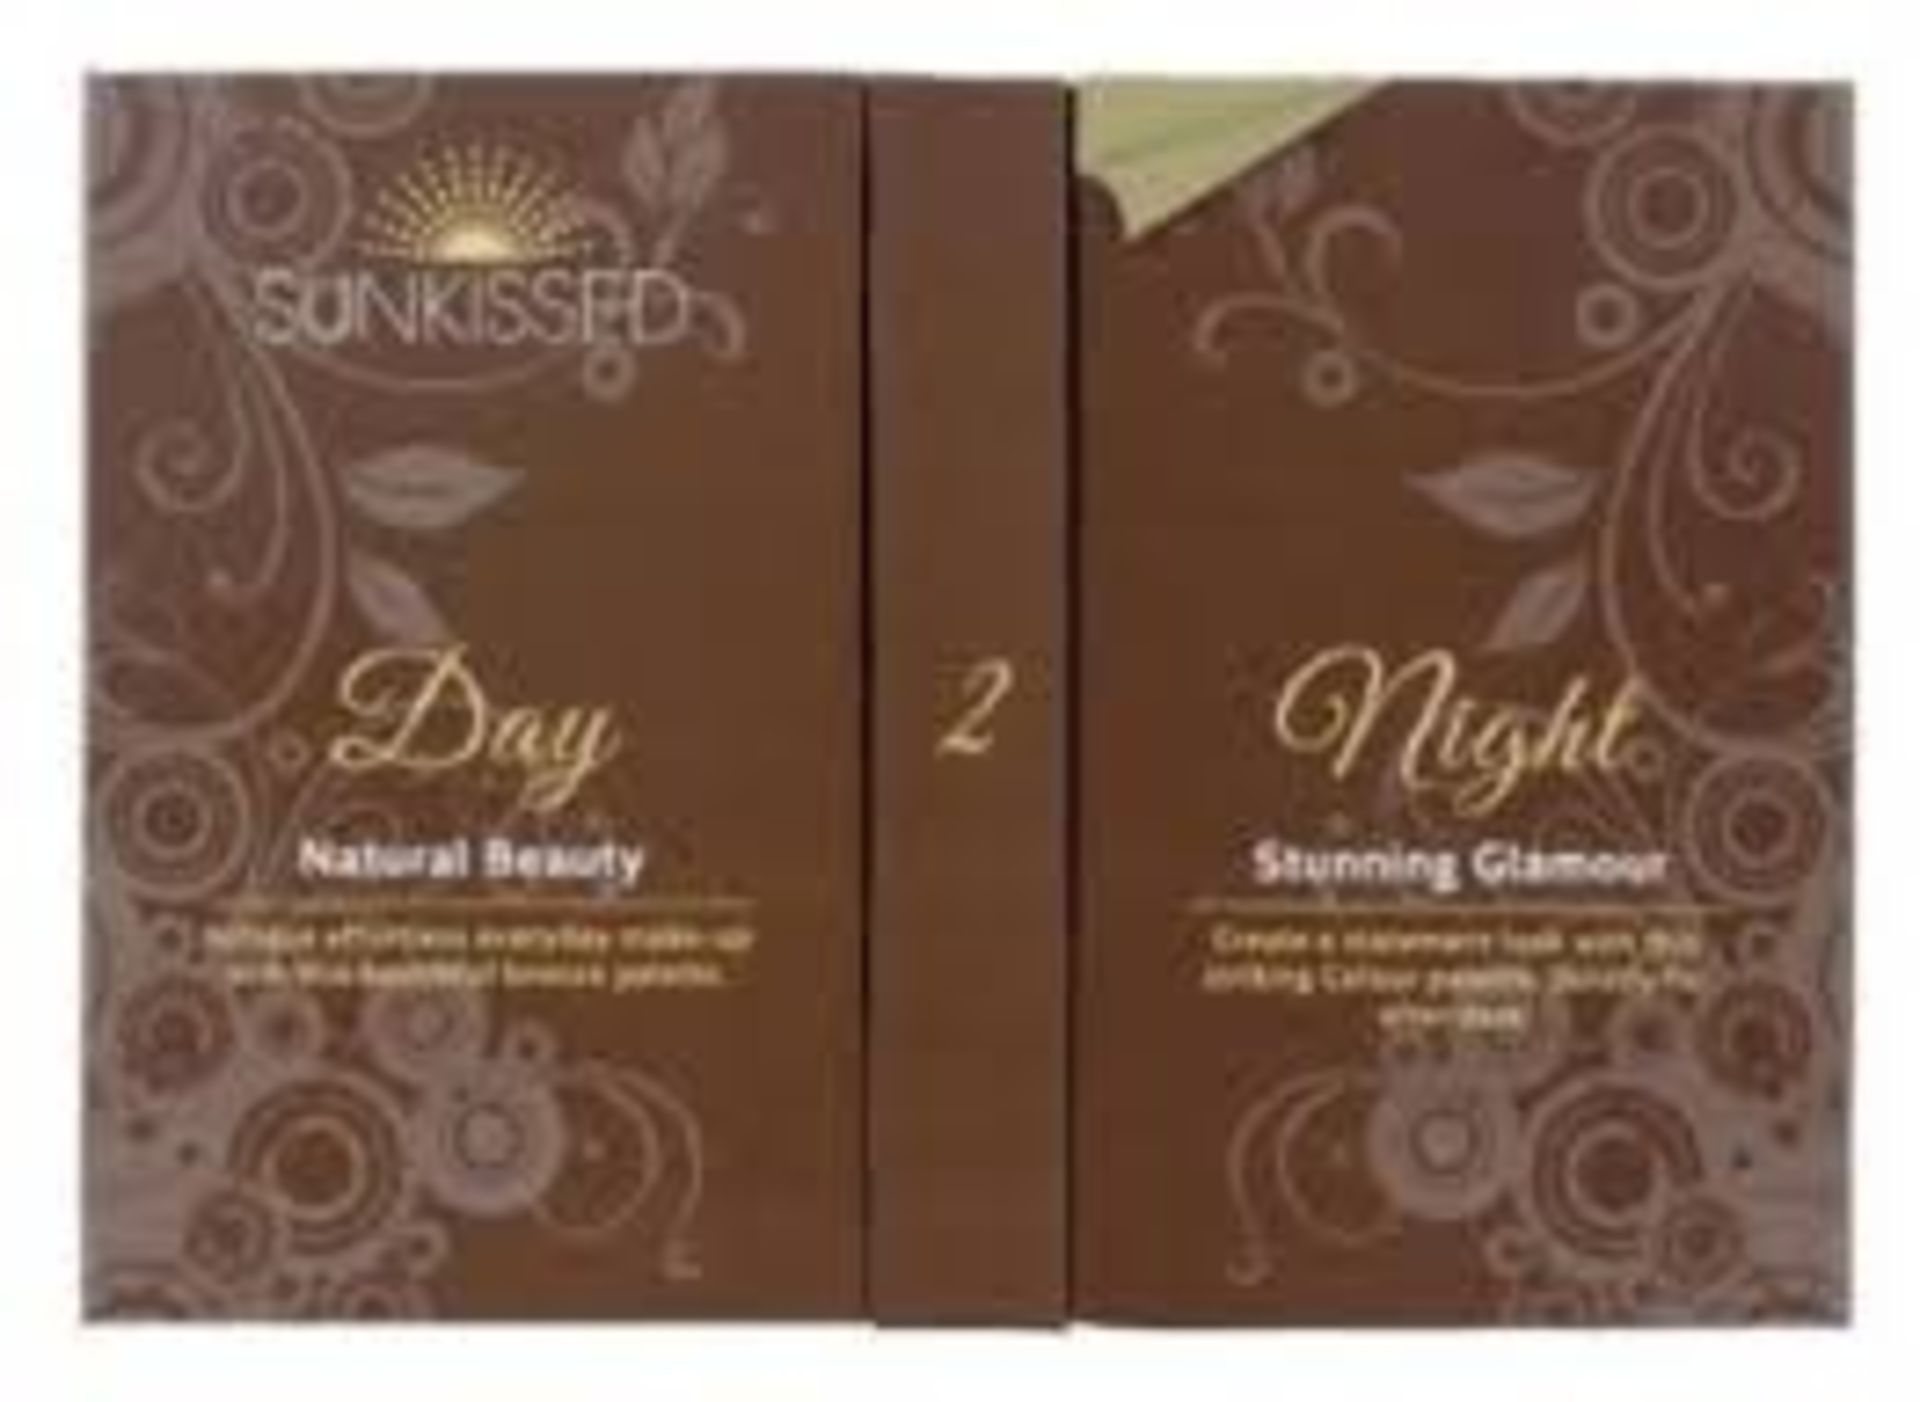 V Sunkissed Day & Night Beauty kit